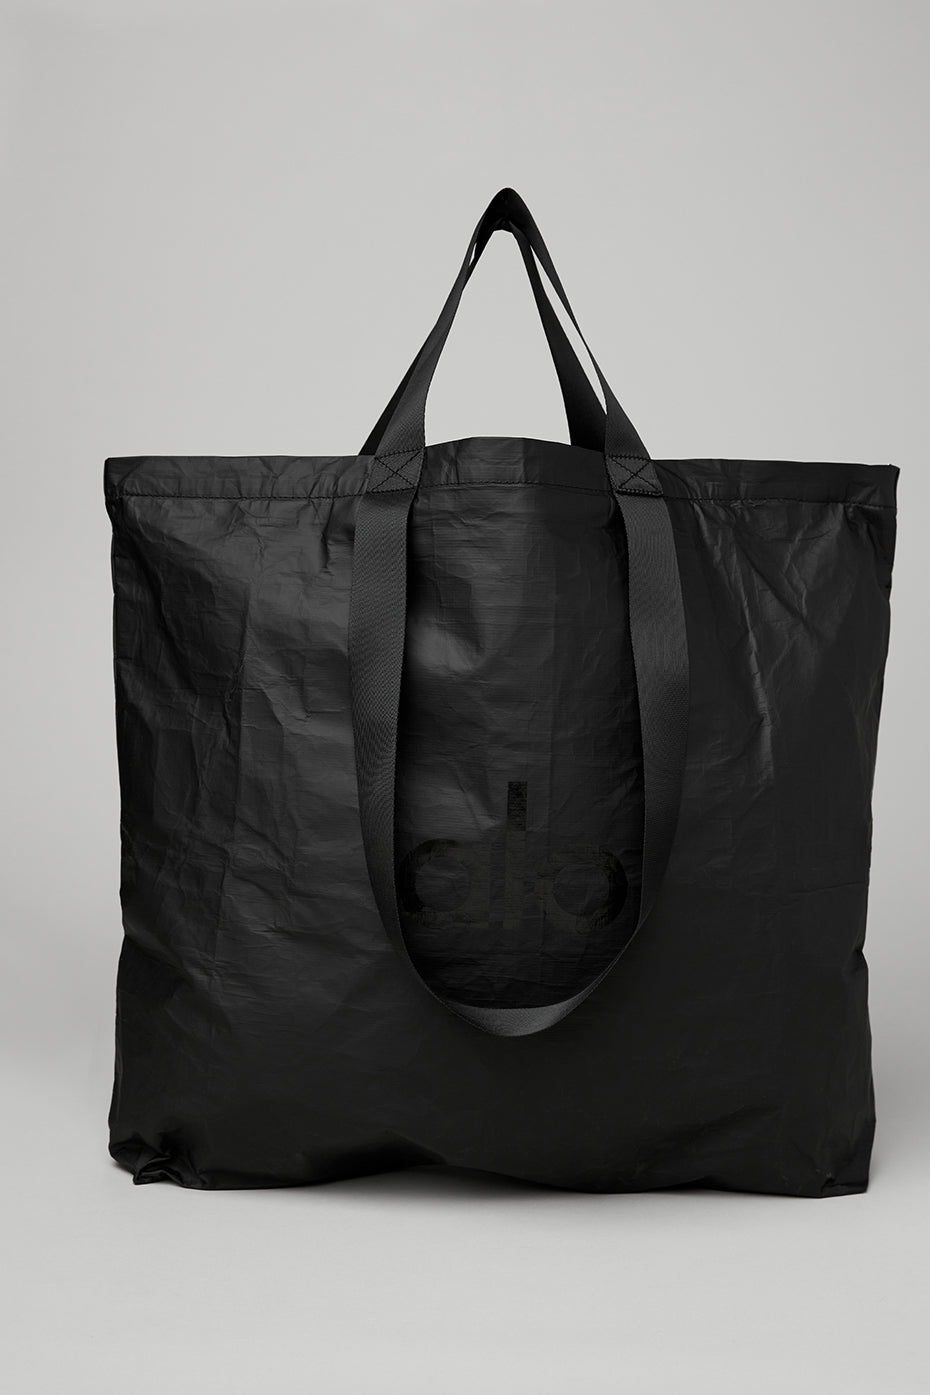 Alo Yoga  Traverse Duffle Bag in Black/Silver - ShopStyle Travel